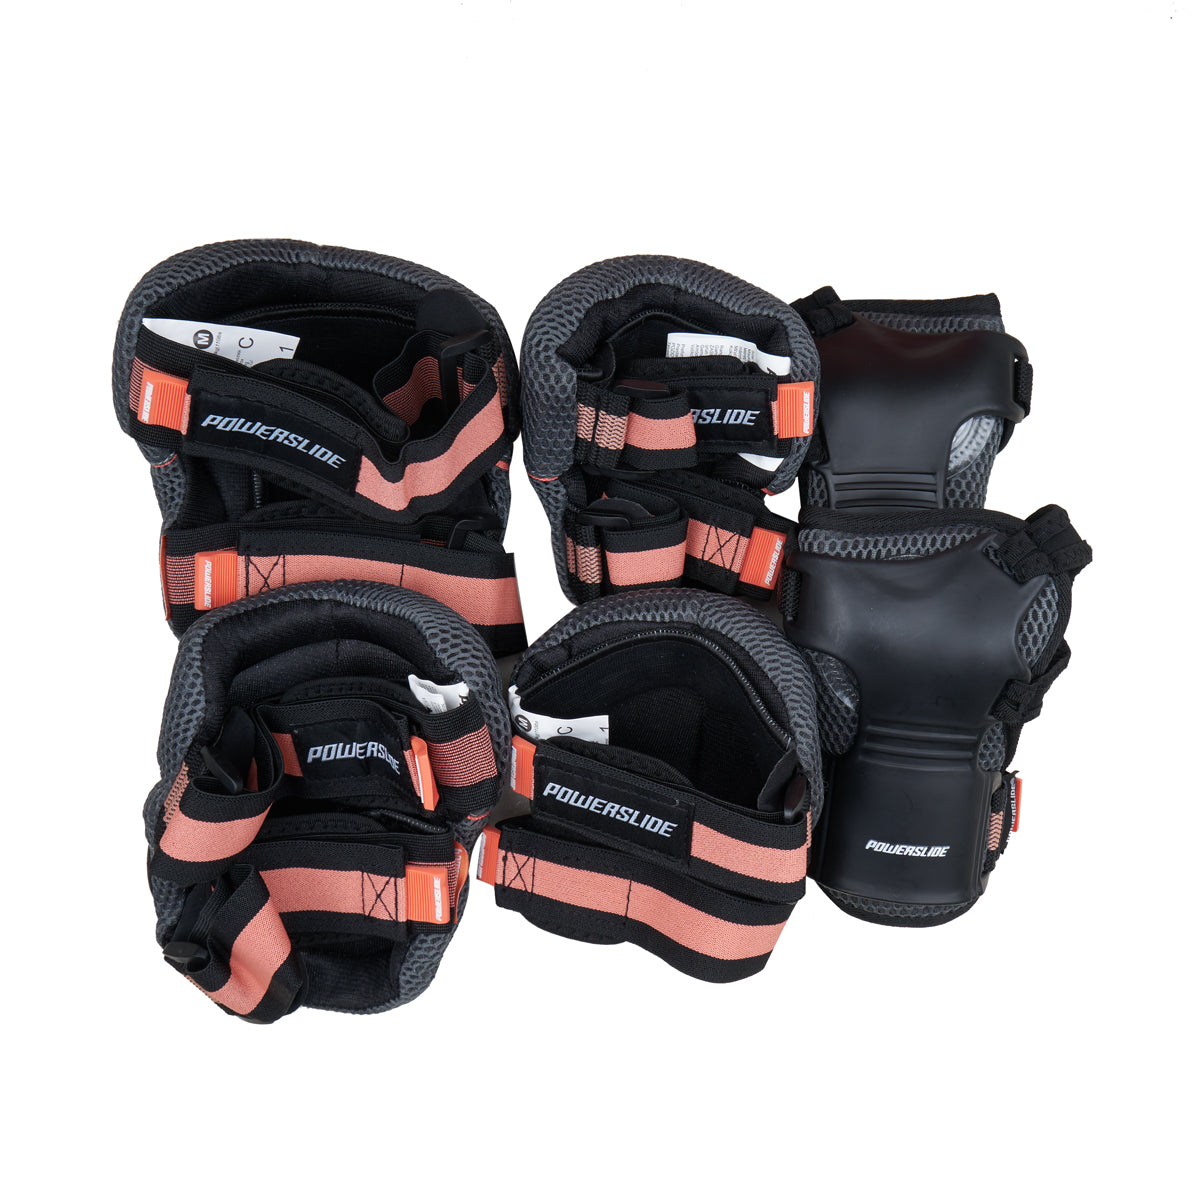 Powerslide Pro Series Protection - Pad Set (Black/Orange)